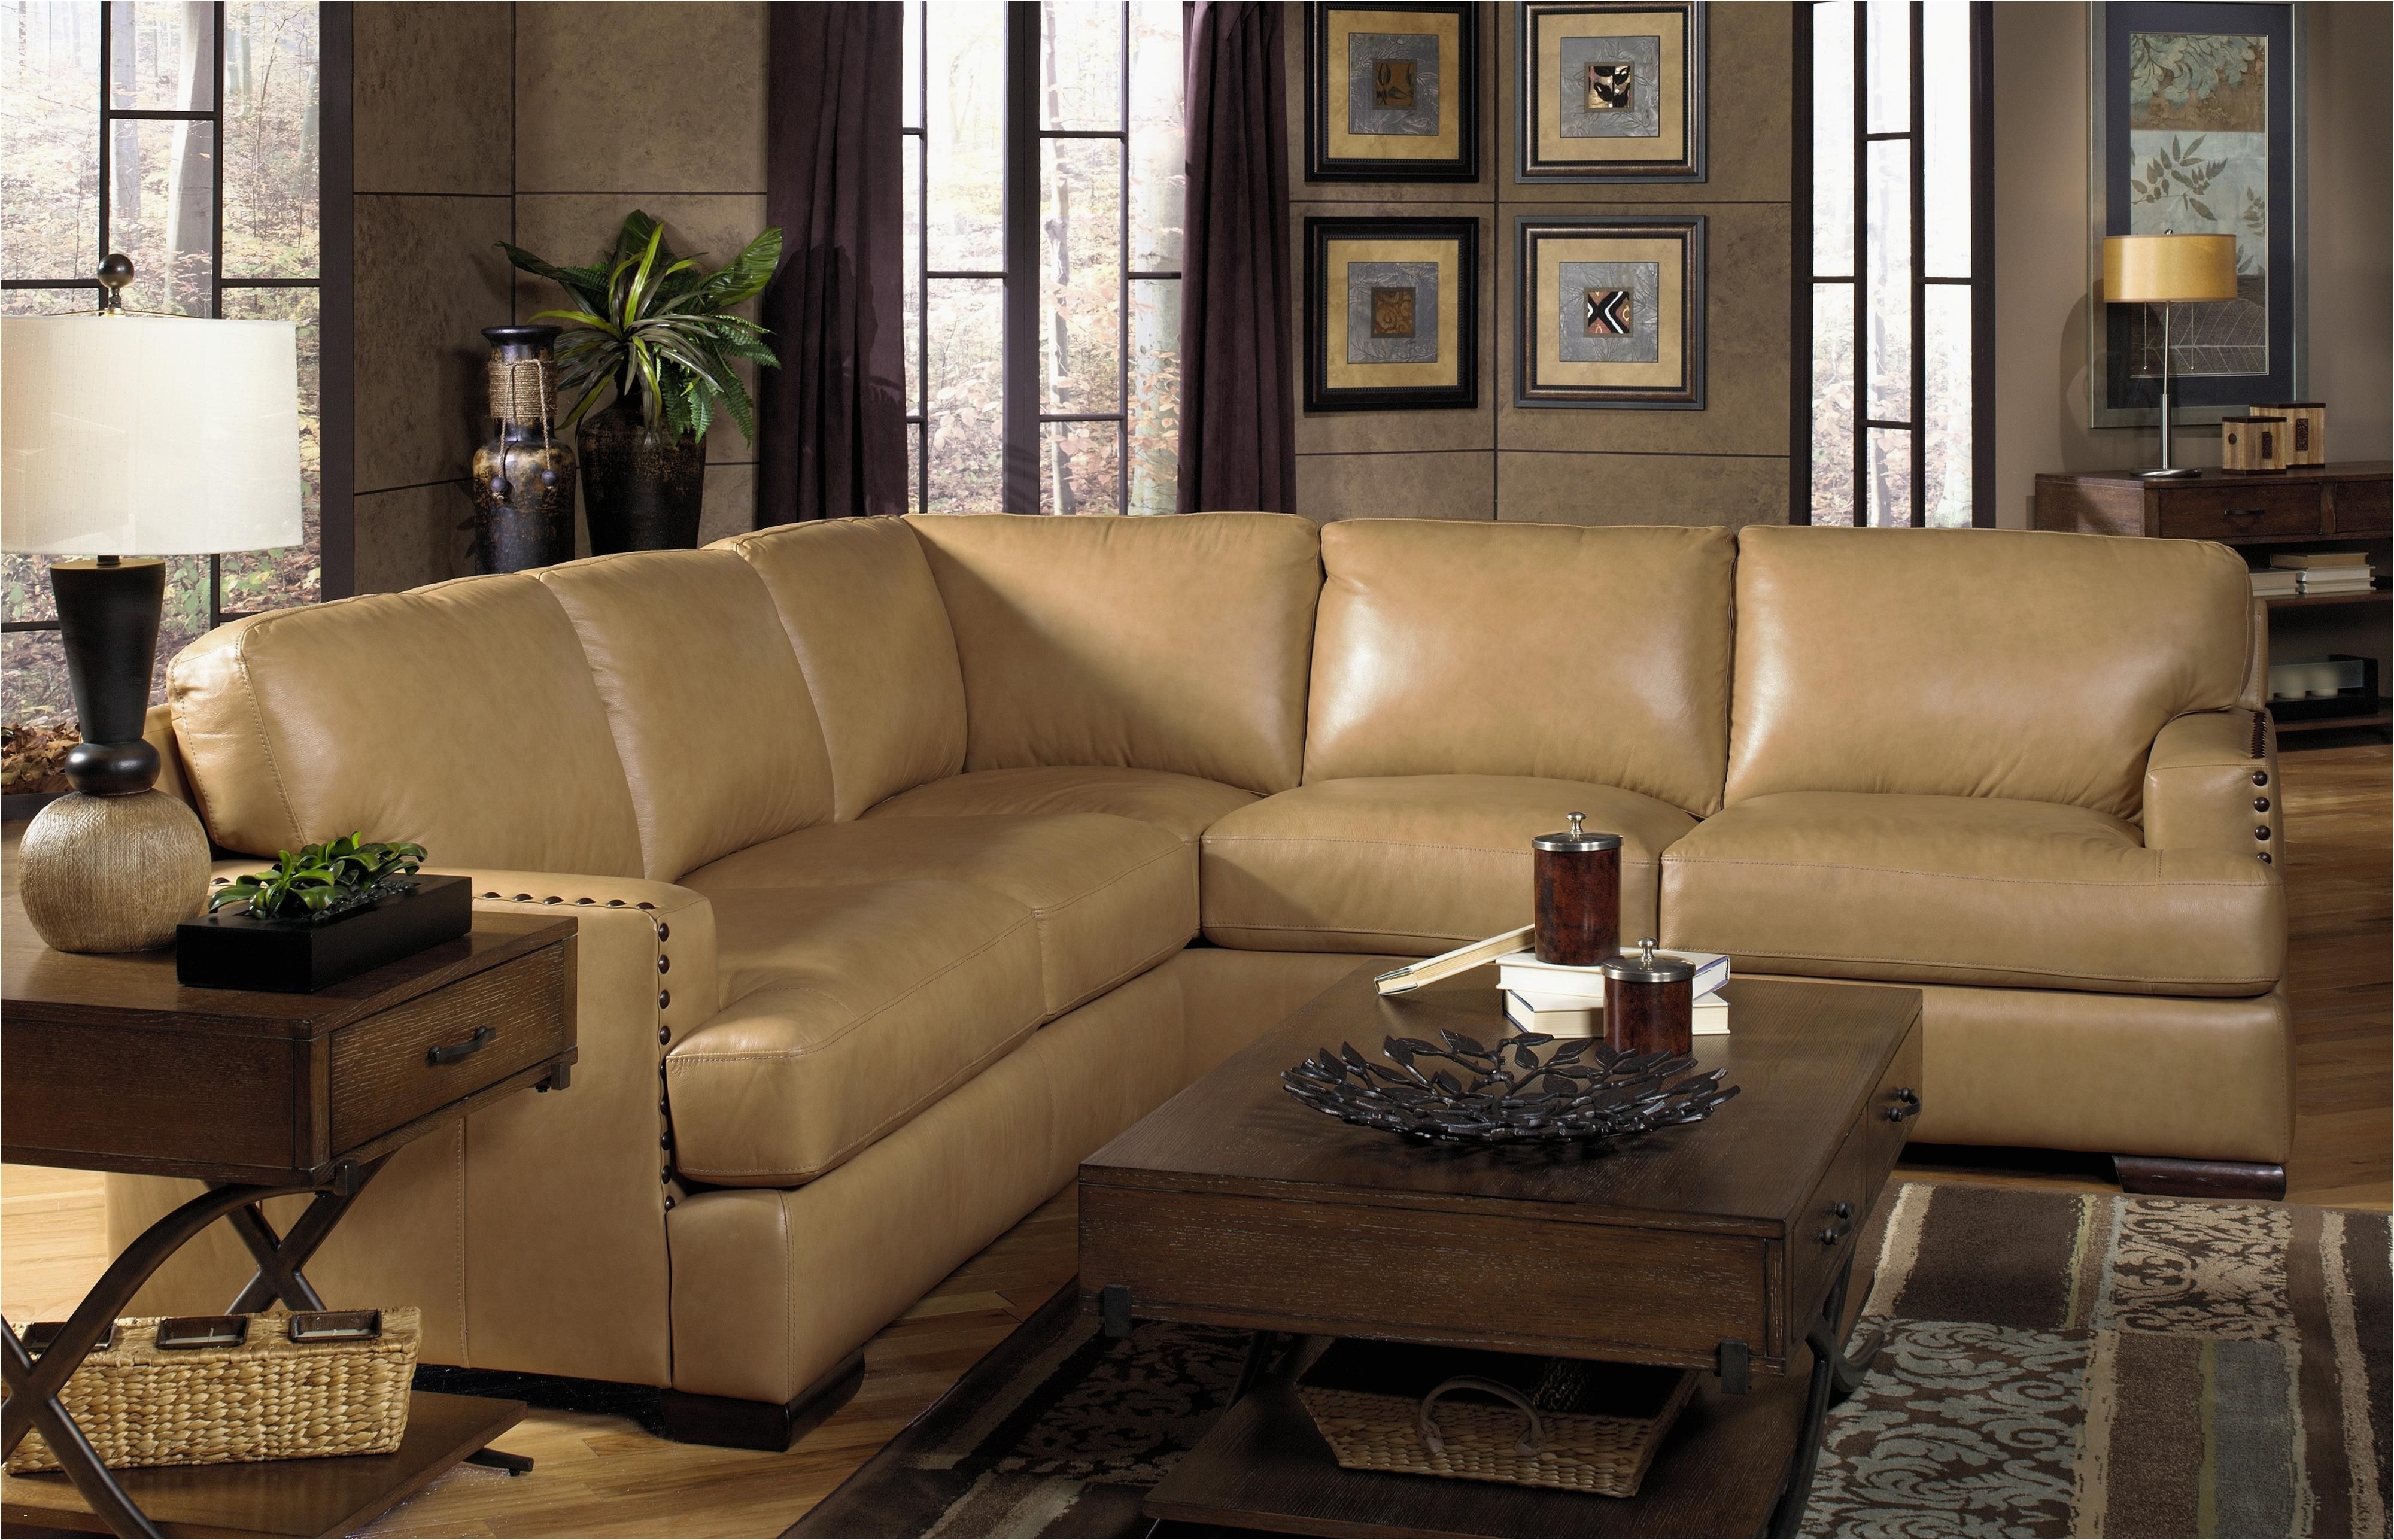 knoxville wholesale furniture clearance center fresh 26 amazing modern brown leather sofa sofa ideas sofa ideas